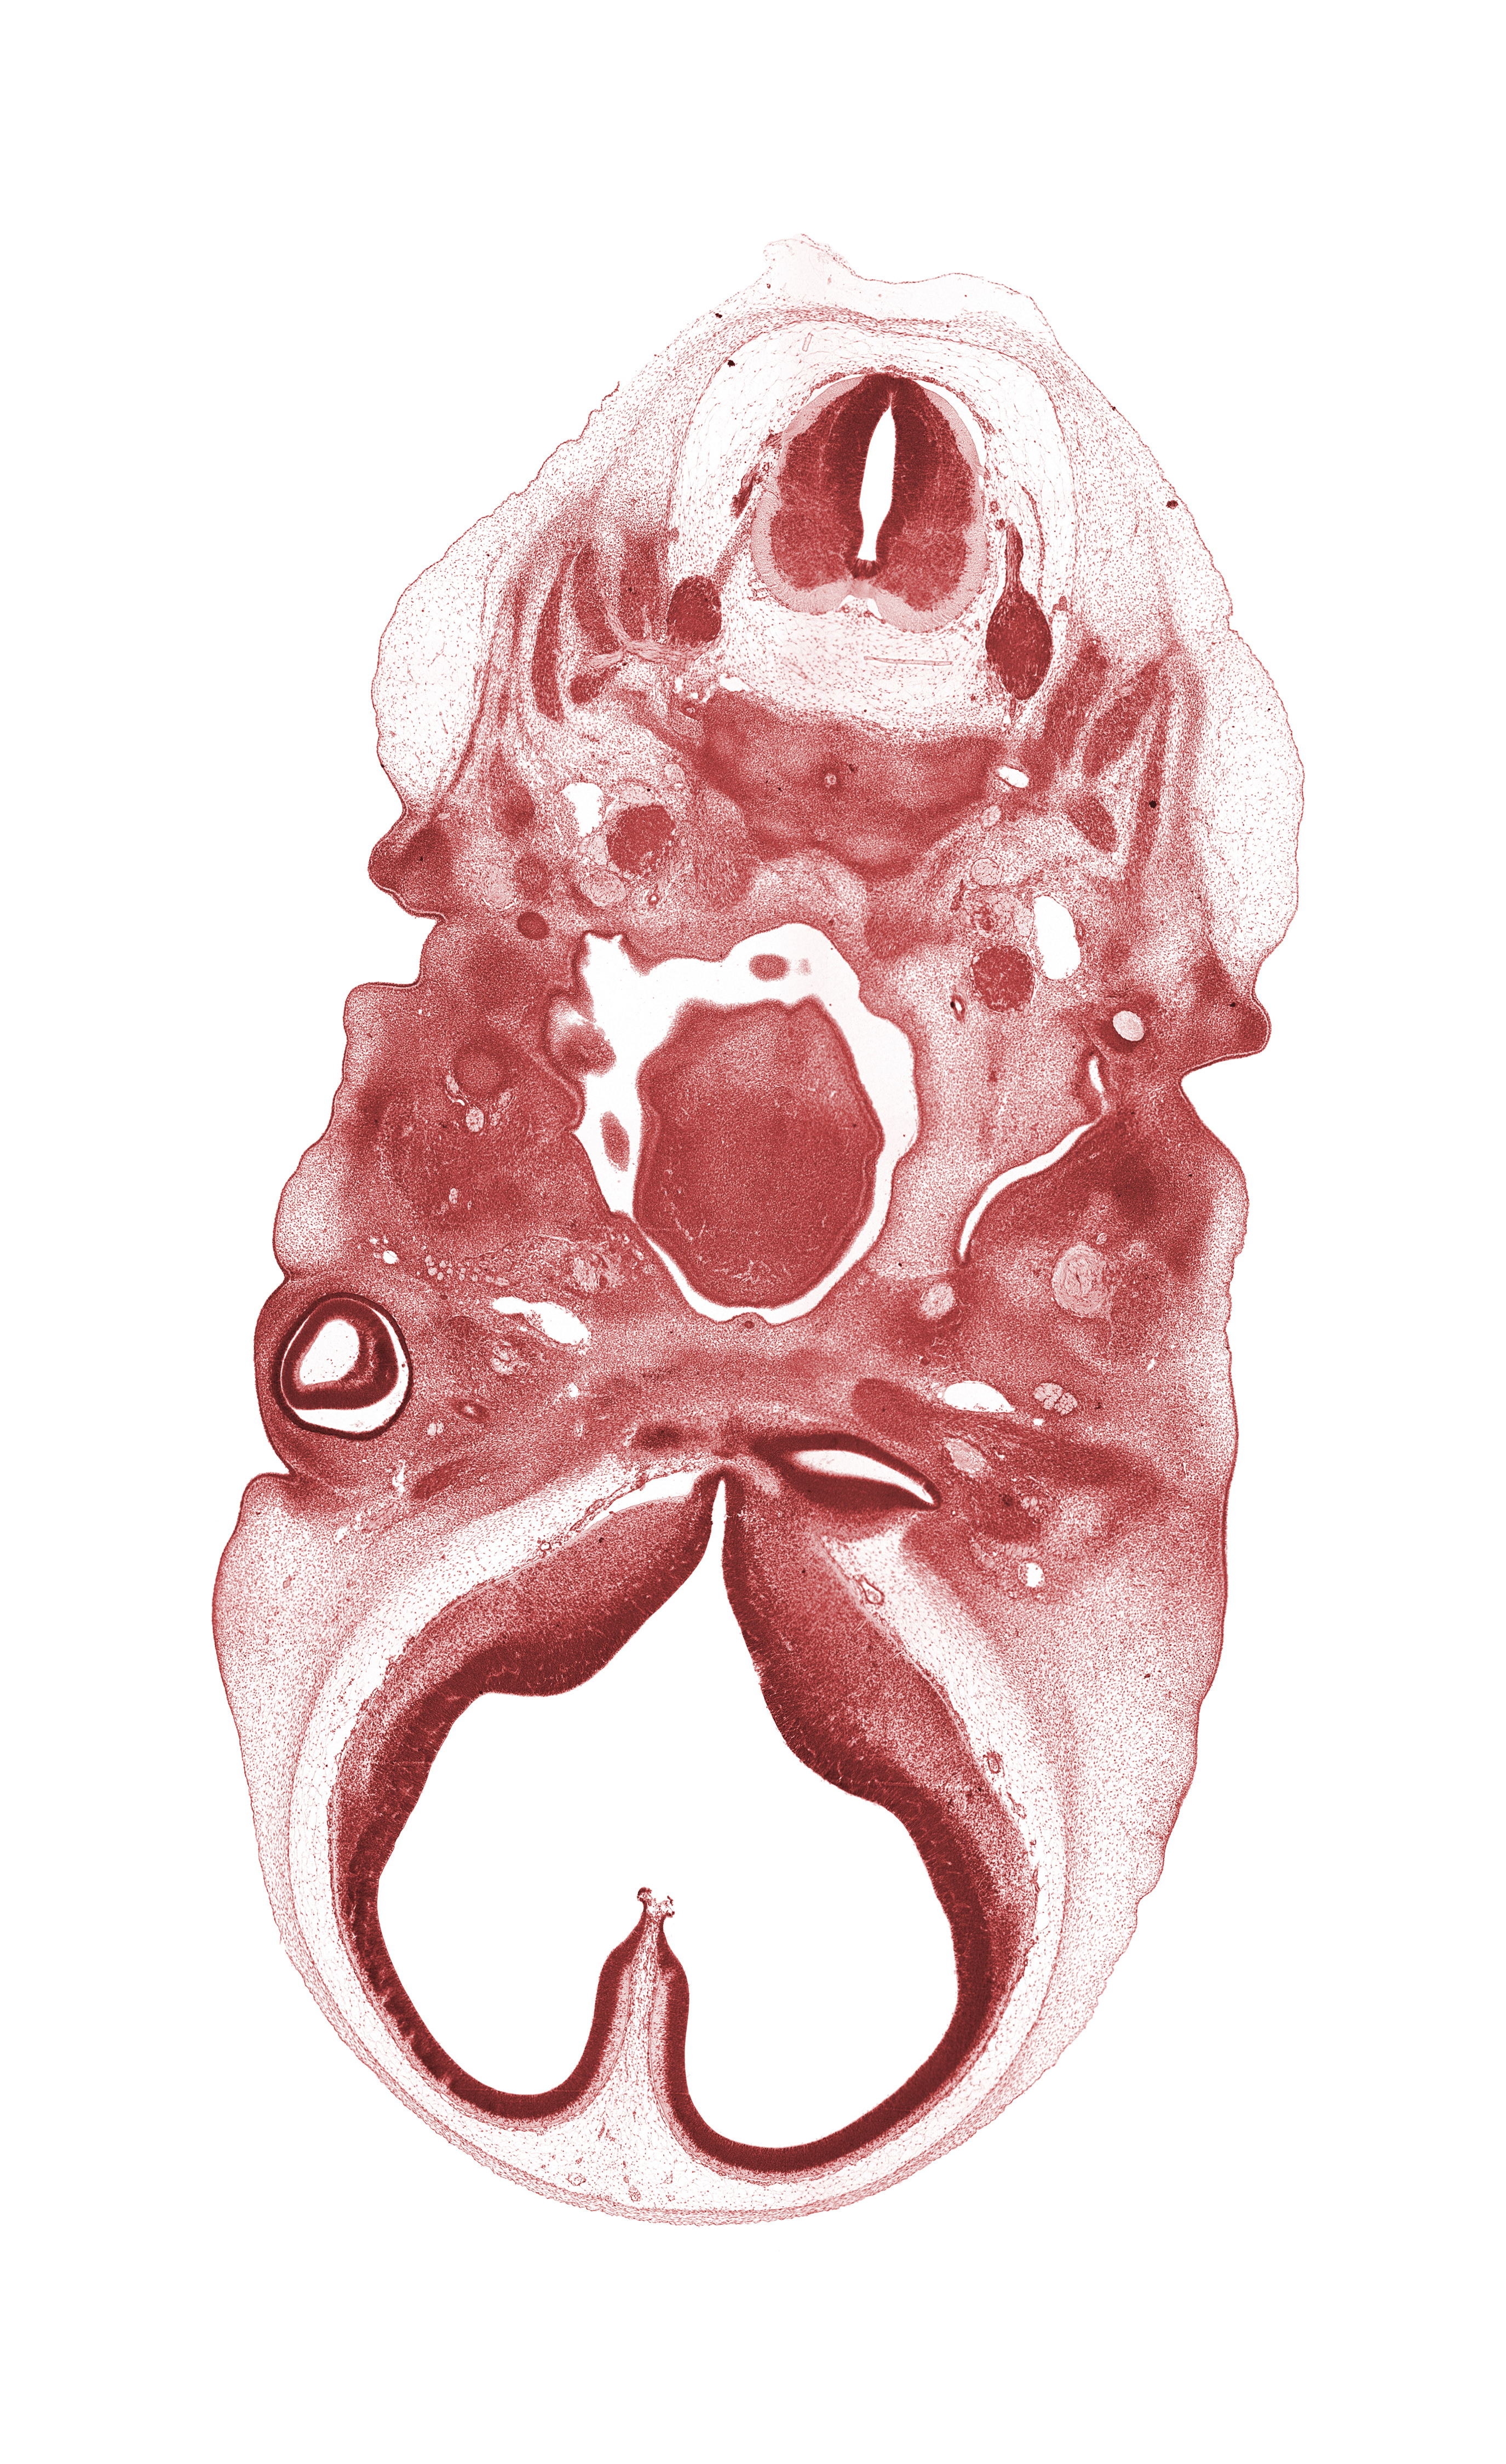 C-2 dorsal root, C-2 spinal ganglion, accessory nerve (CN XI), atlanto-occipital joint, basisphenoid condensation, blastemata of tongue muscles, dens of C-2 vertebra (axis) region, edge of epiglottis, inferior ganglion of glossopharyngeal nerve (CN IX), internal carotid artery, lamina terminalis, lower eyelid, mandibular nerve (CN V₃), maxillary nerve (CN V₂), maxillary vein, notochord, ophthalmic nerve (CN V₁), optic ventricle, pre-optic area, precardinal vein, root of tongue, stem of adenohypophysis, telencephalon, upper eyelid, vagus nerve (CN X)